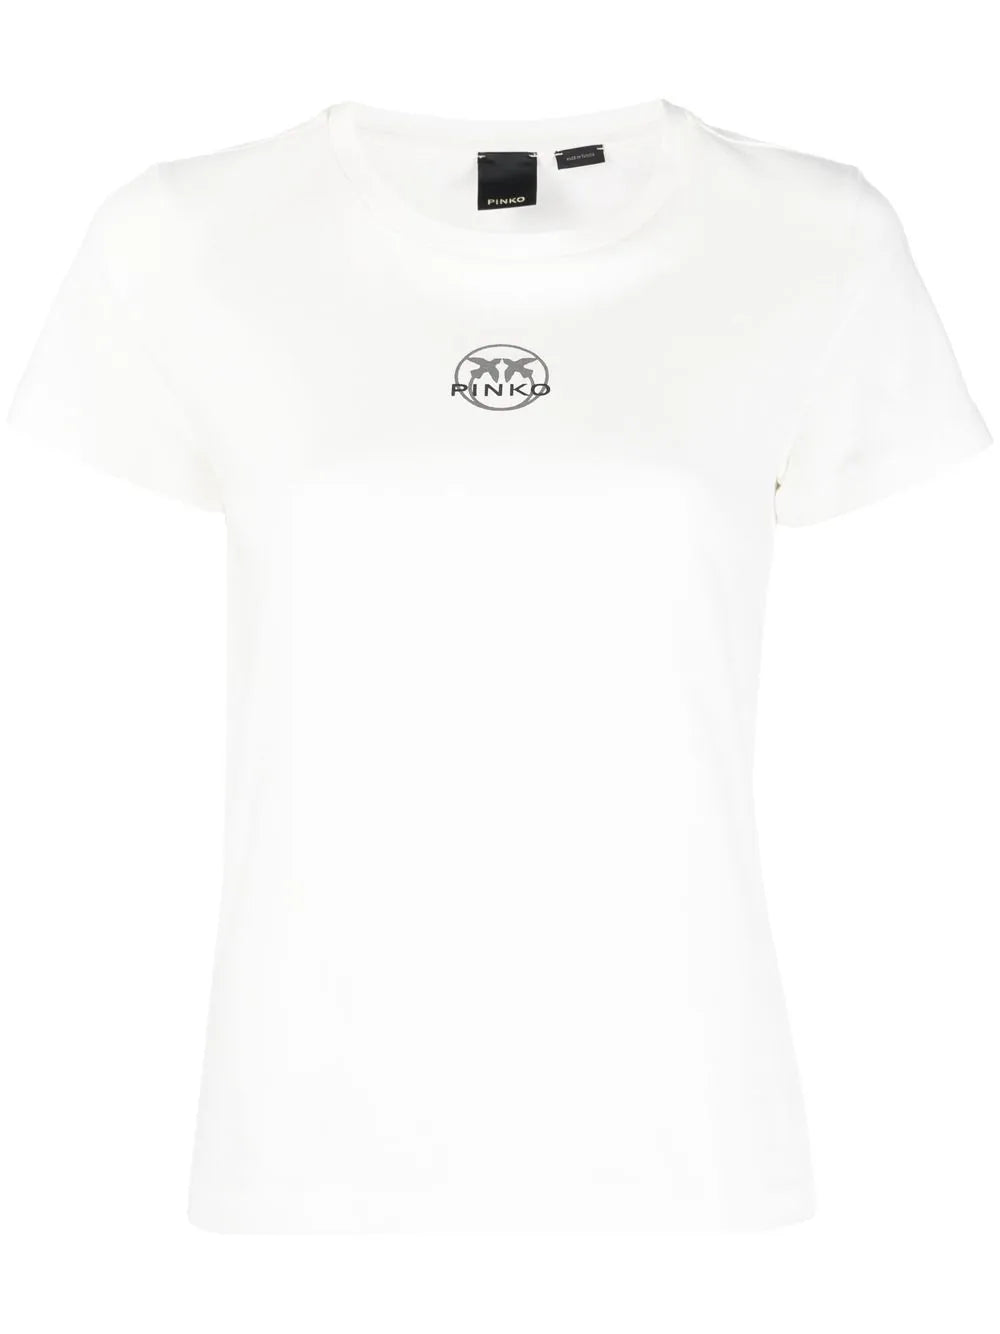 T-Shirt con Logo Pinko / Bianco - Ideal Moda